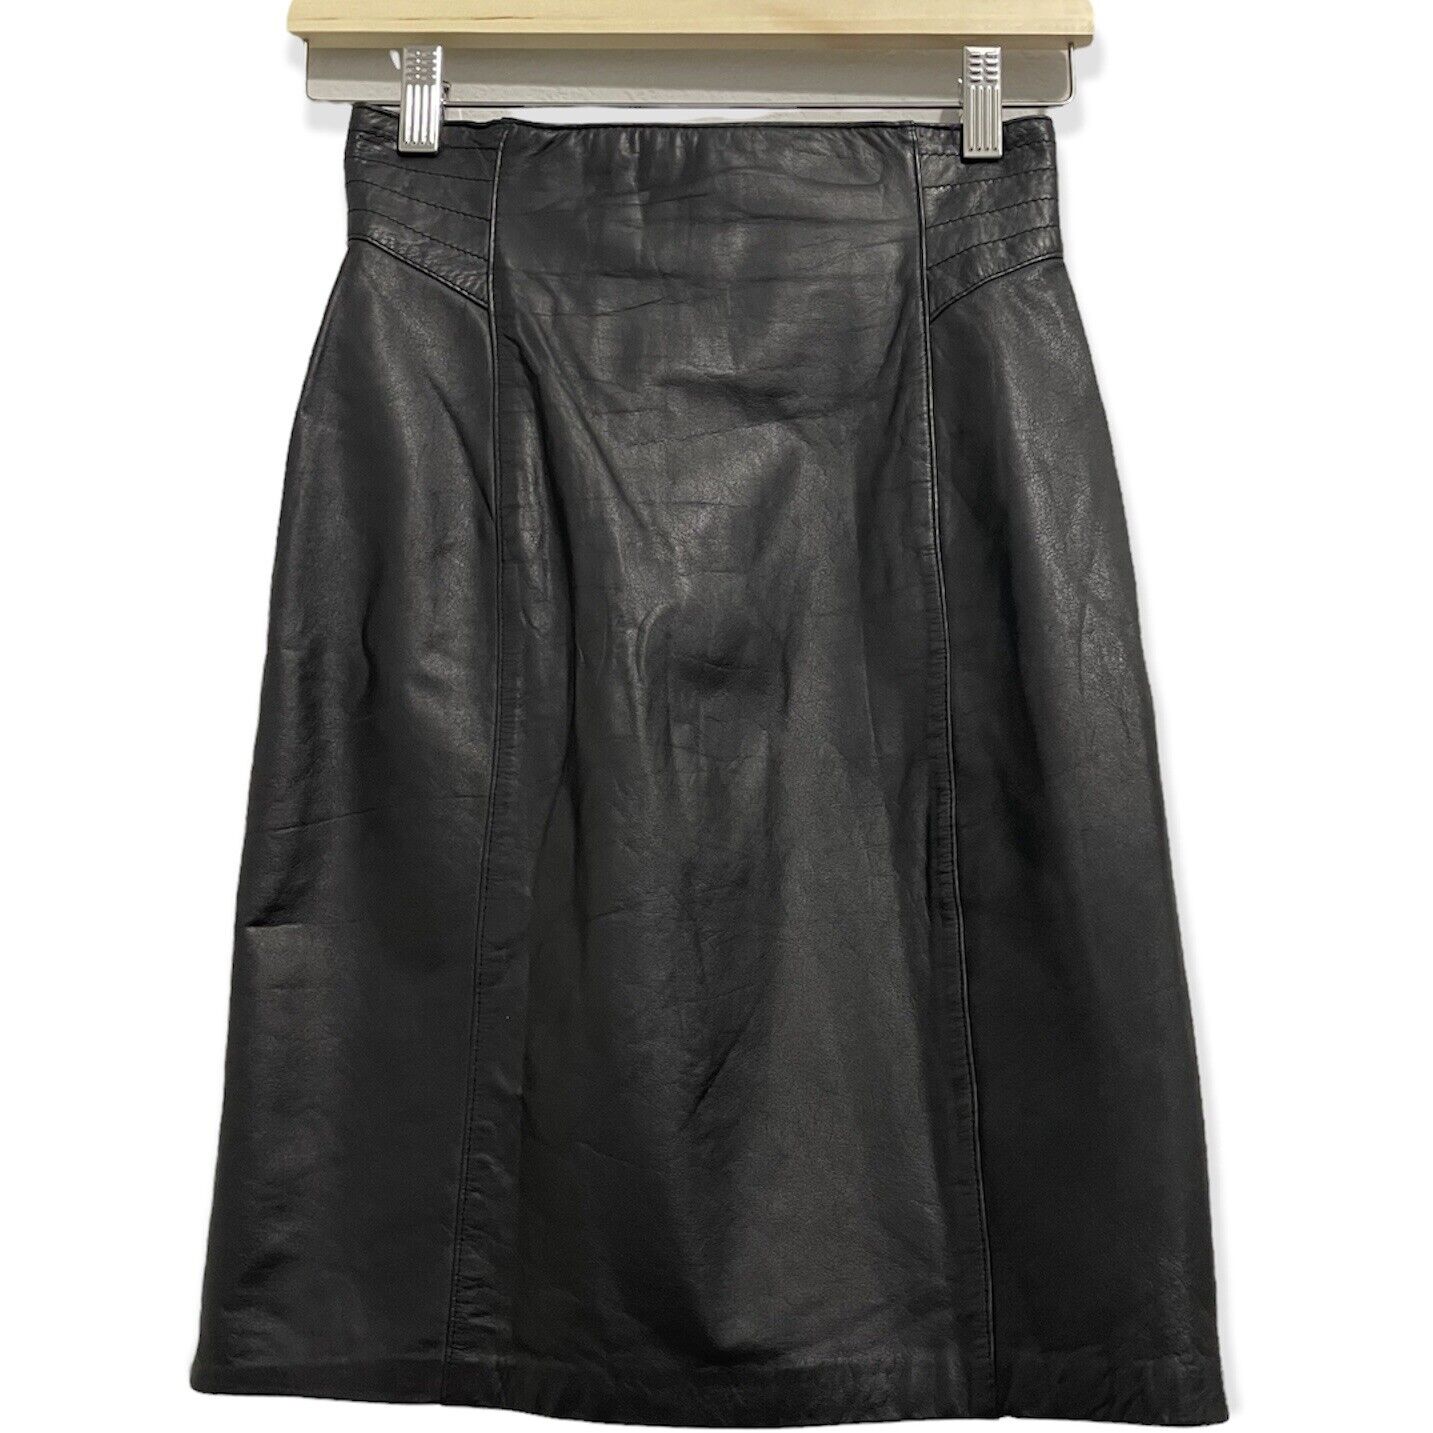 Toffs Leather Skirt Genuine Black High Rise Penci… - image 1